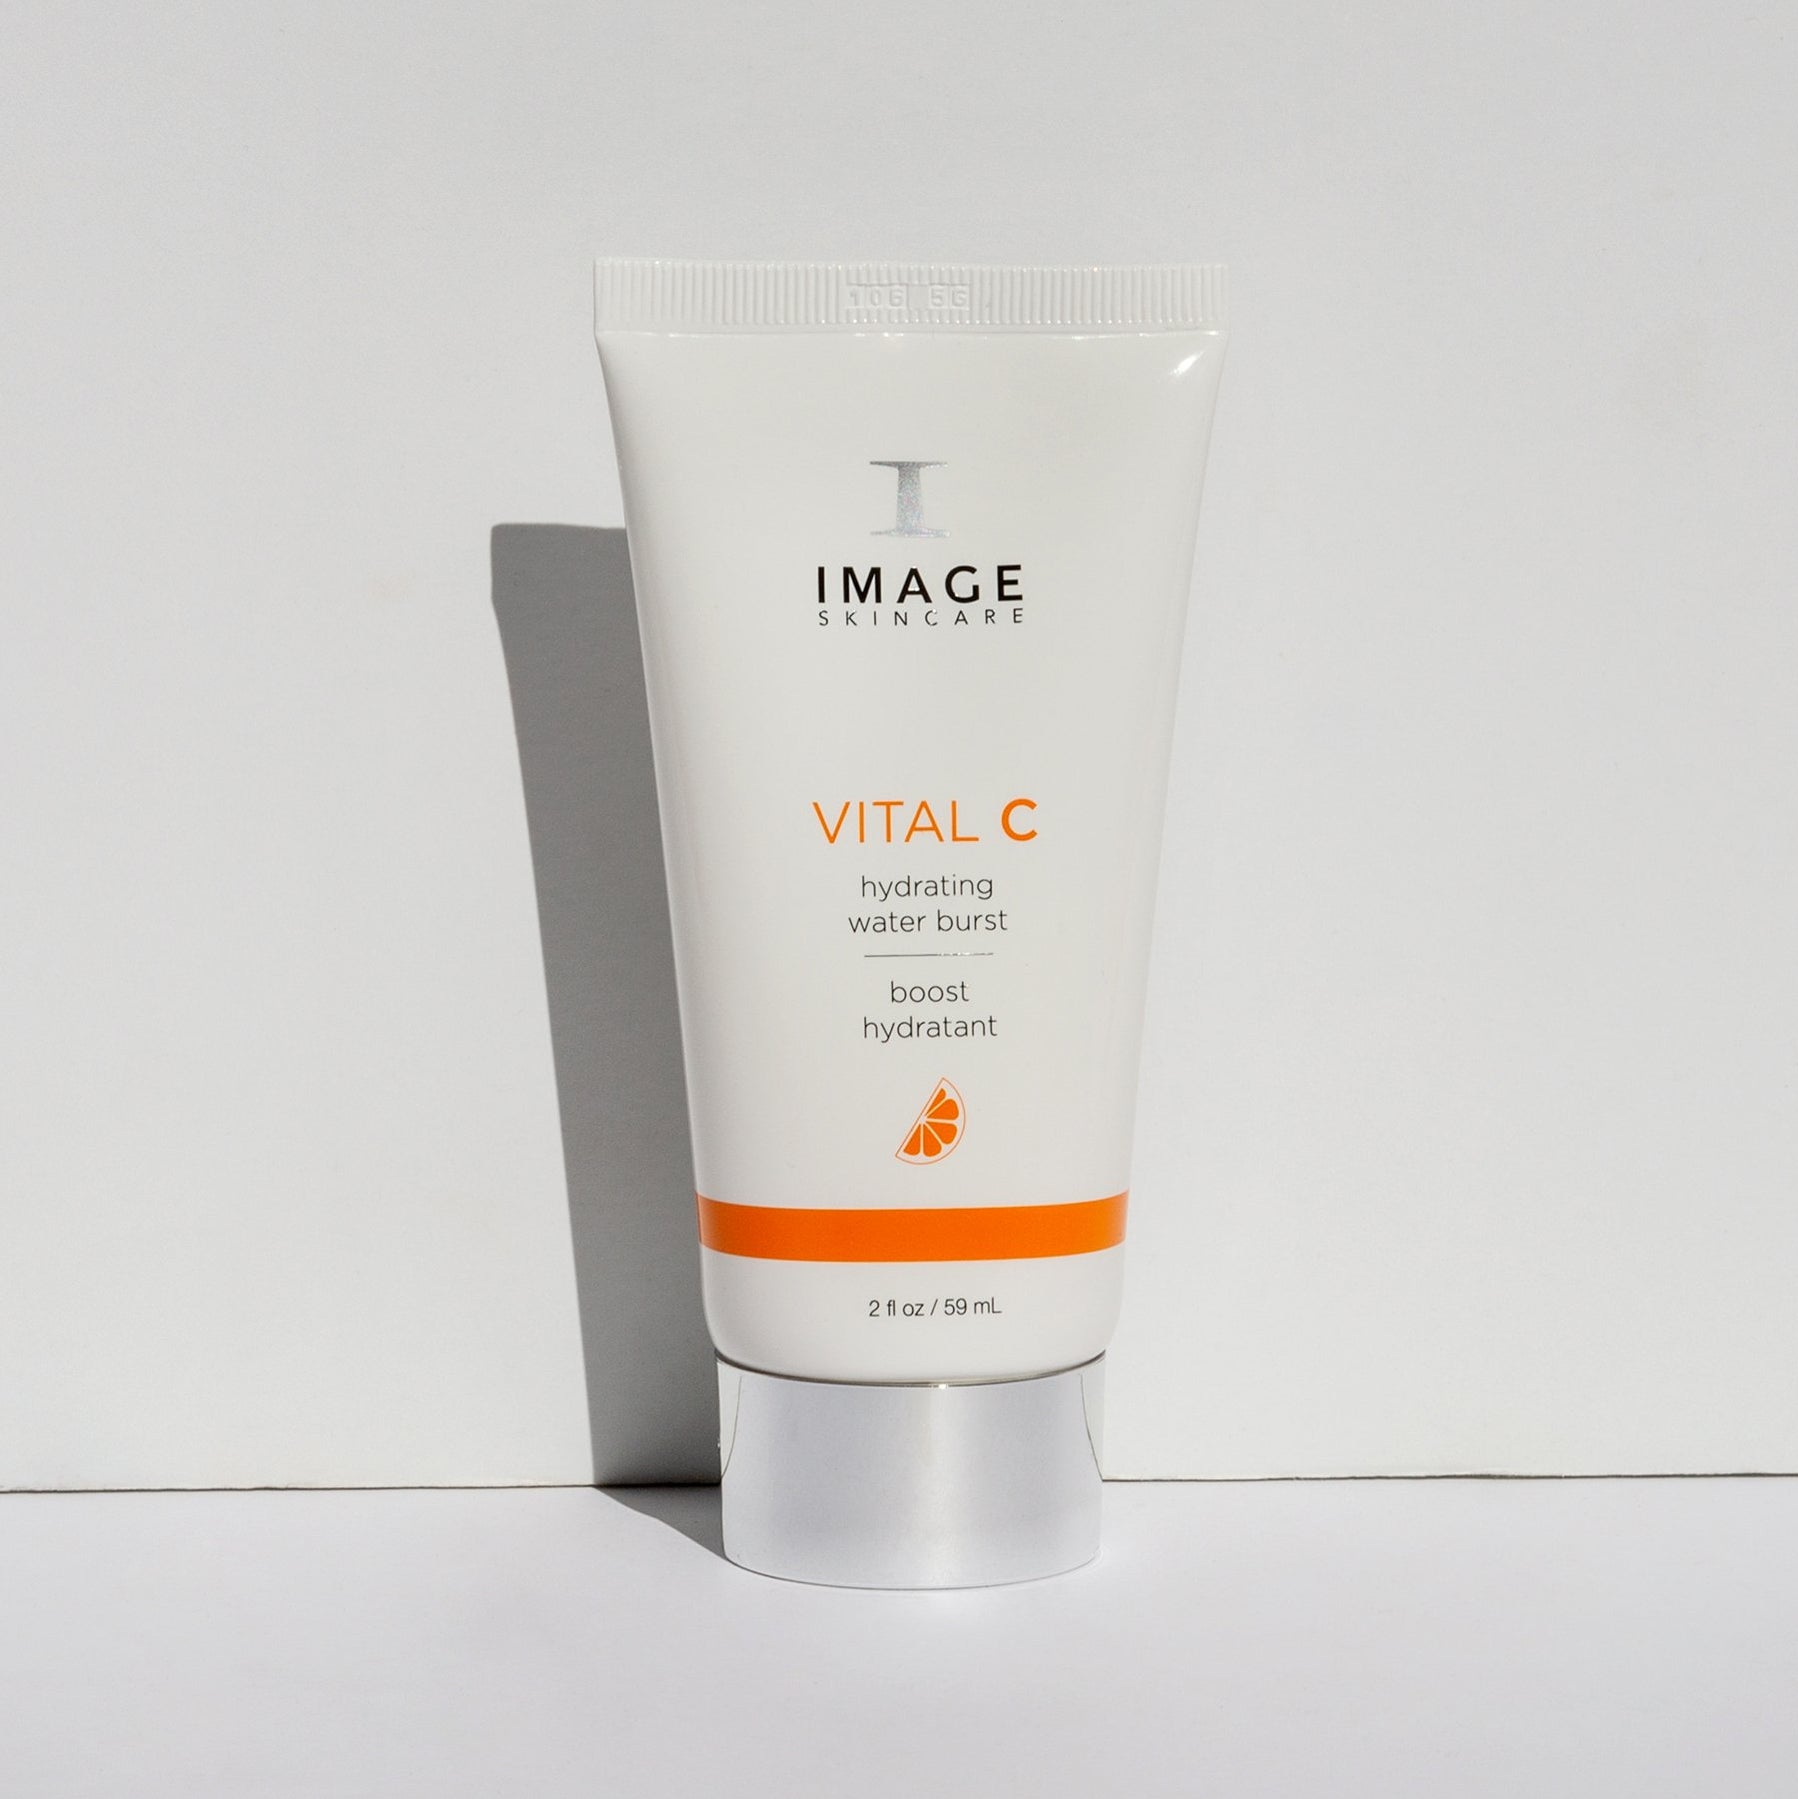 VITAL C hydrating water burst | IMAGE Skincare